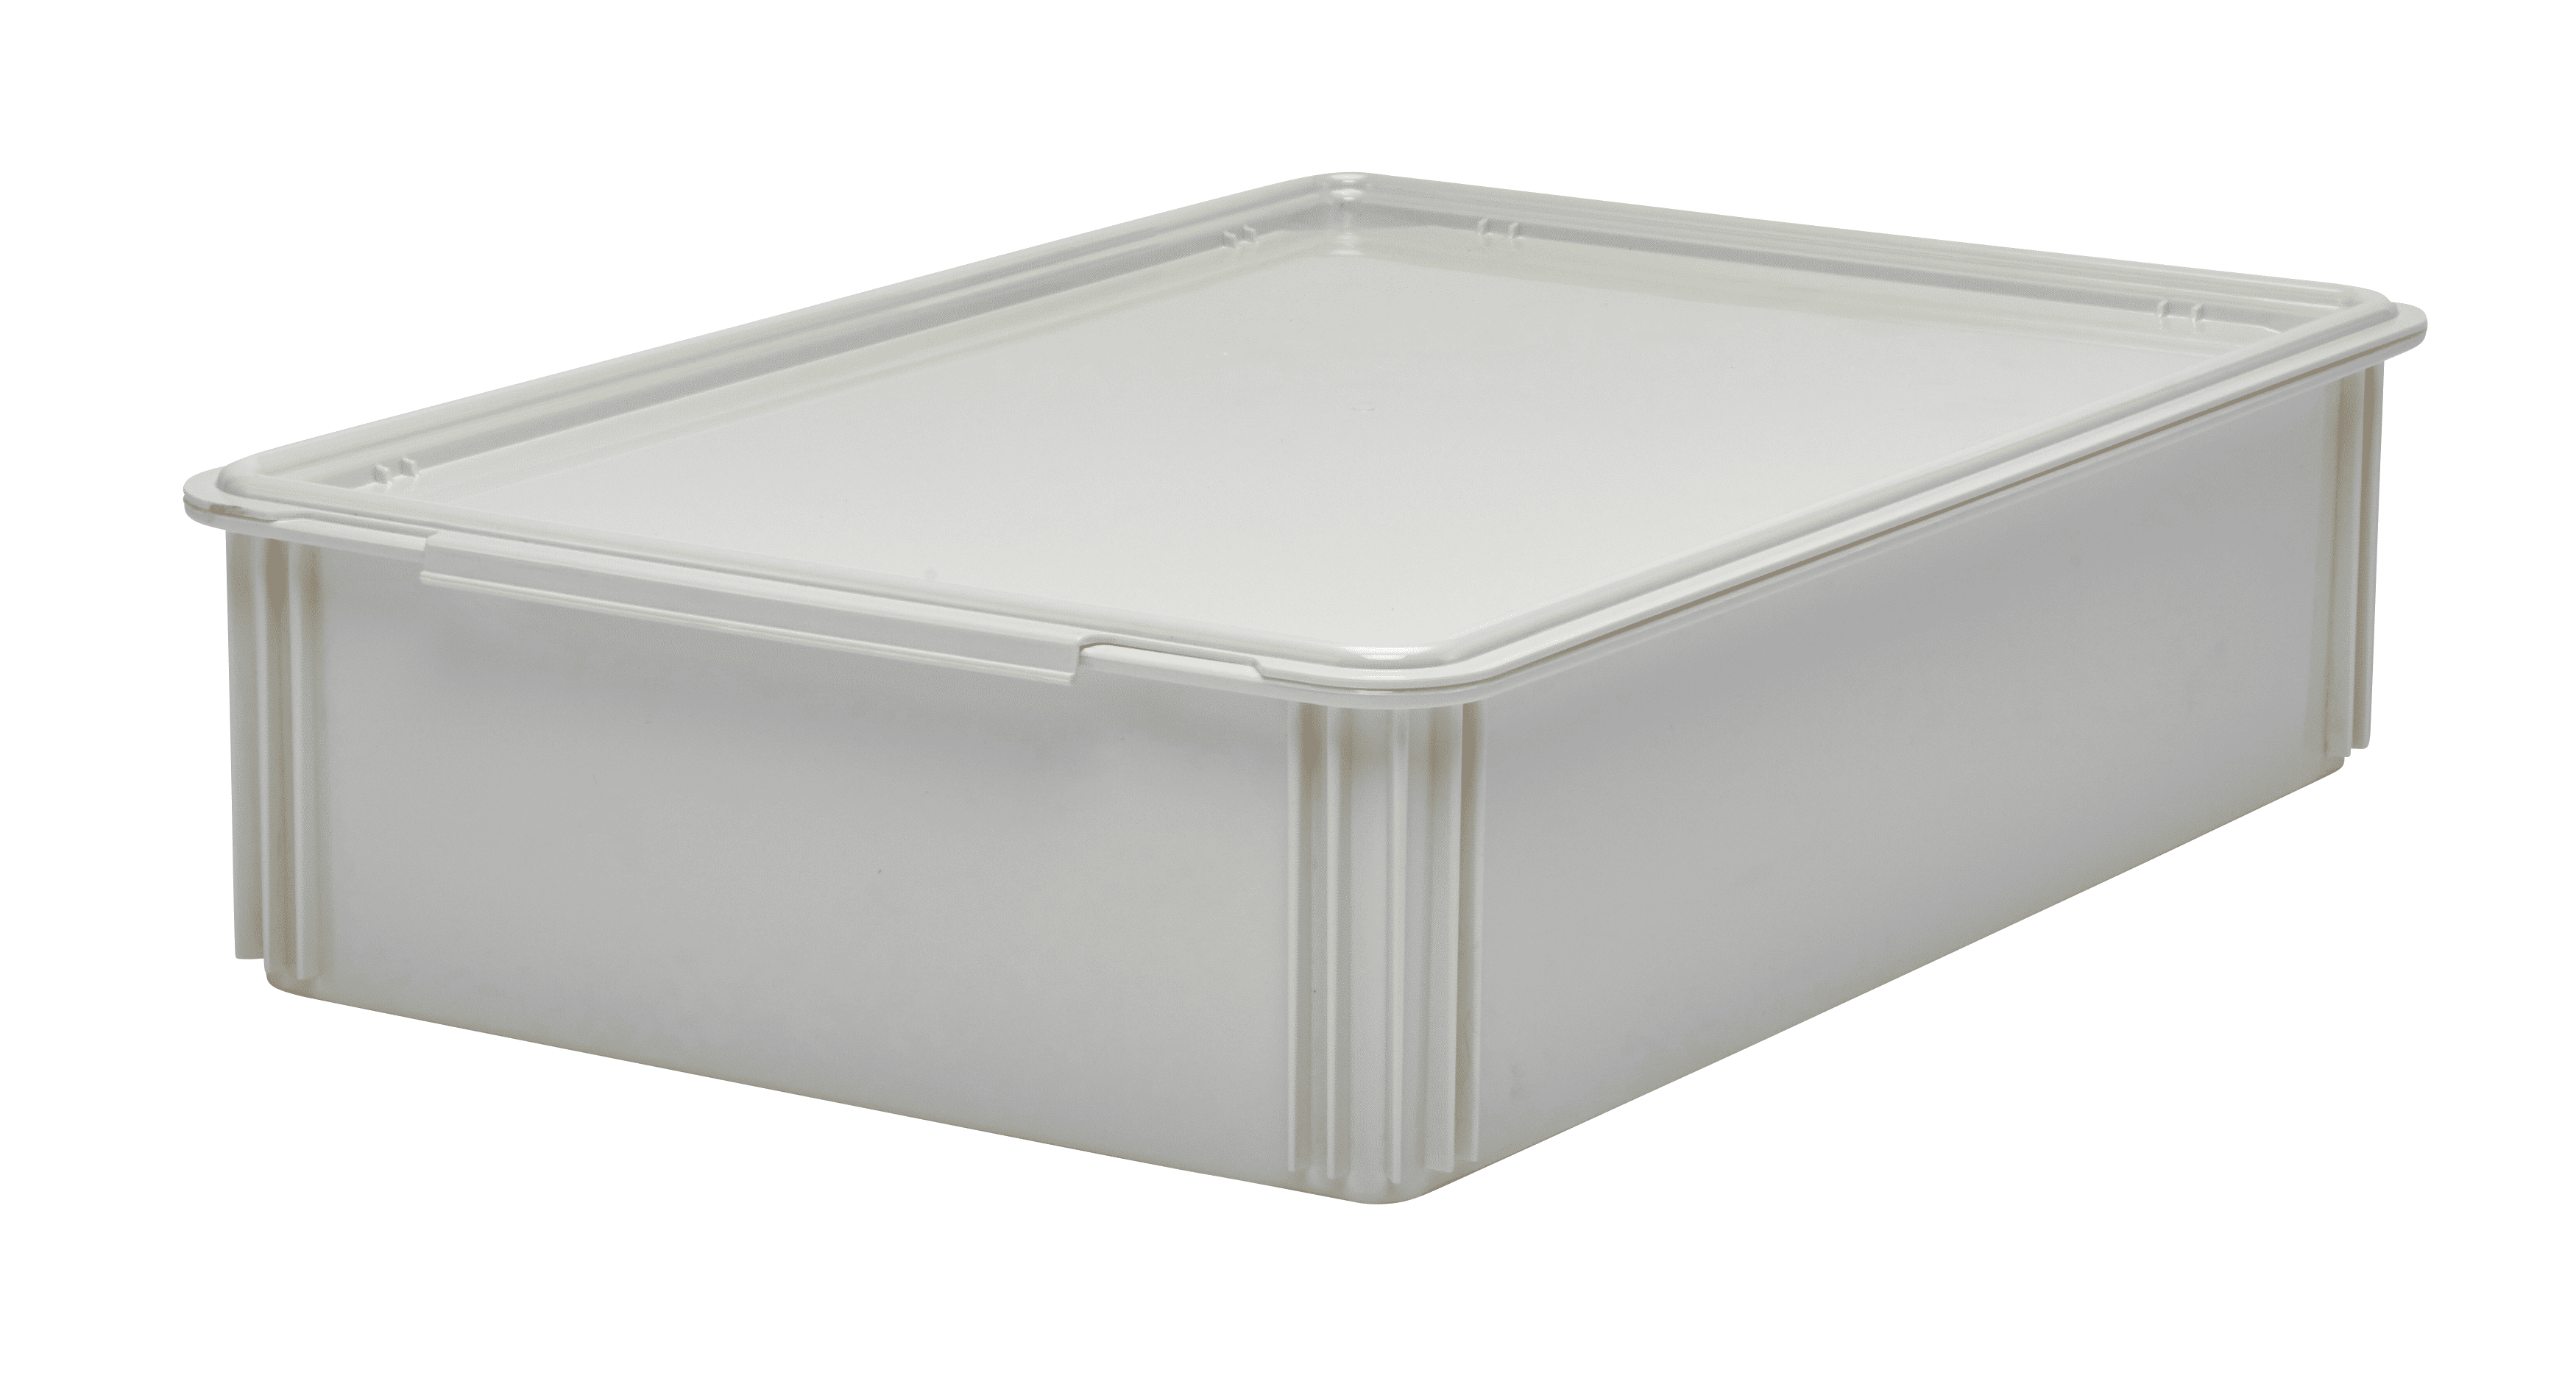 Reusable Pizza Storage Container – Bravo Goods